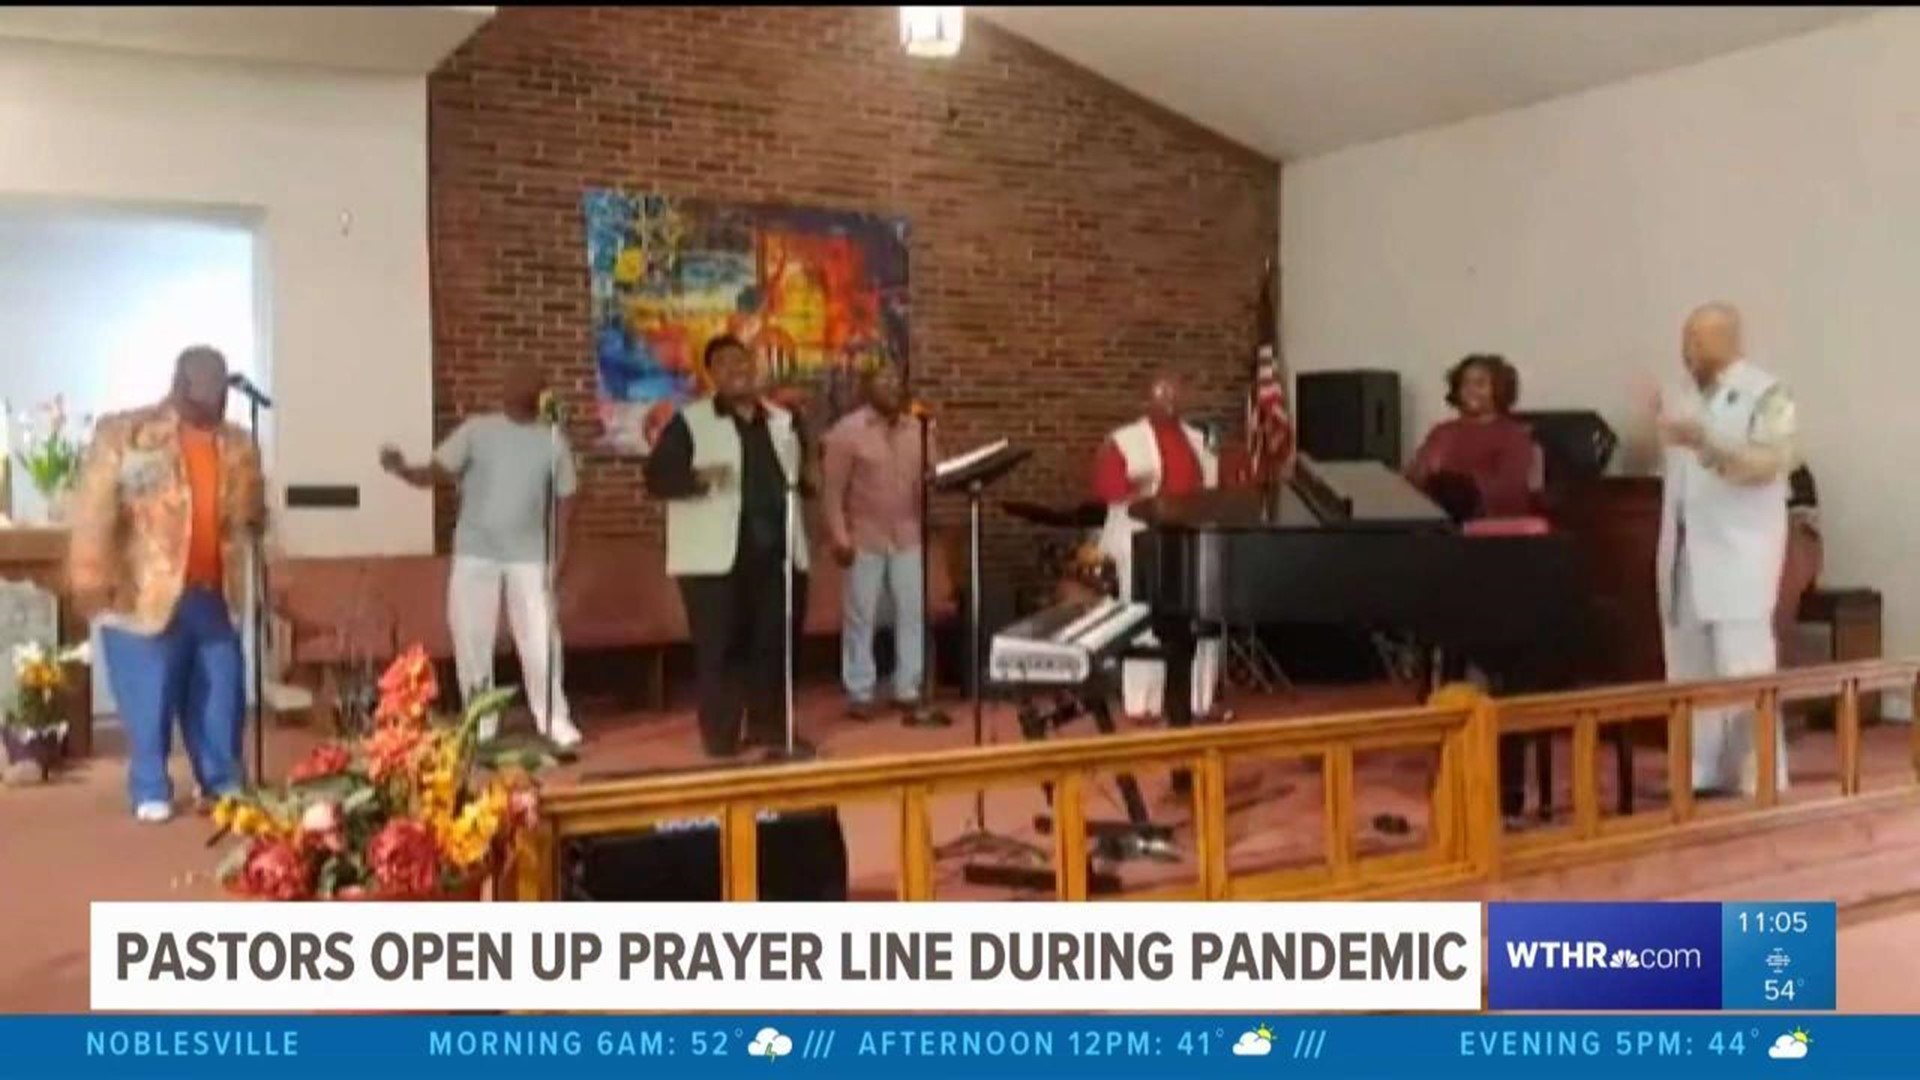 Pastors open up prayer line during pandemic